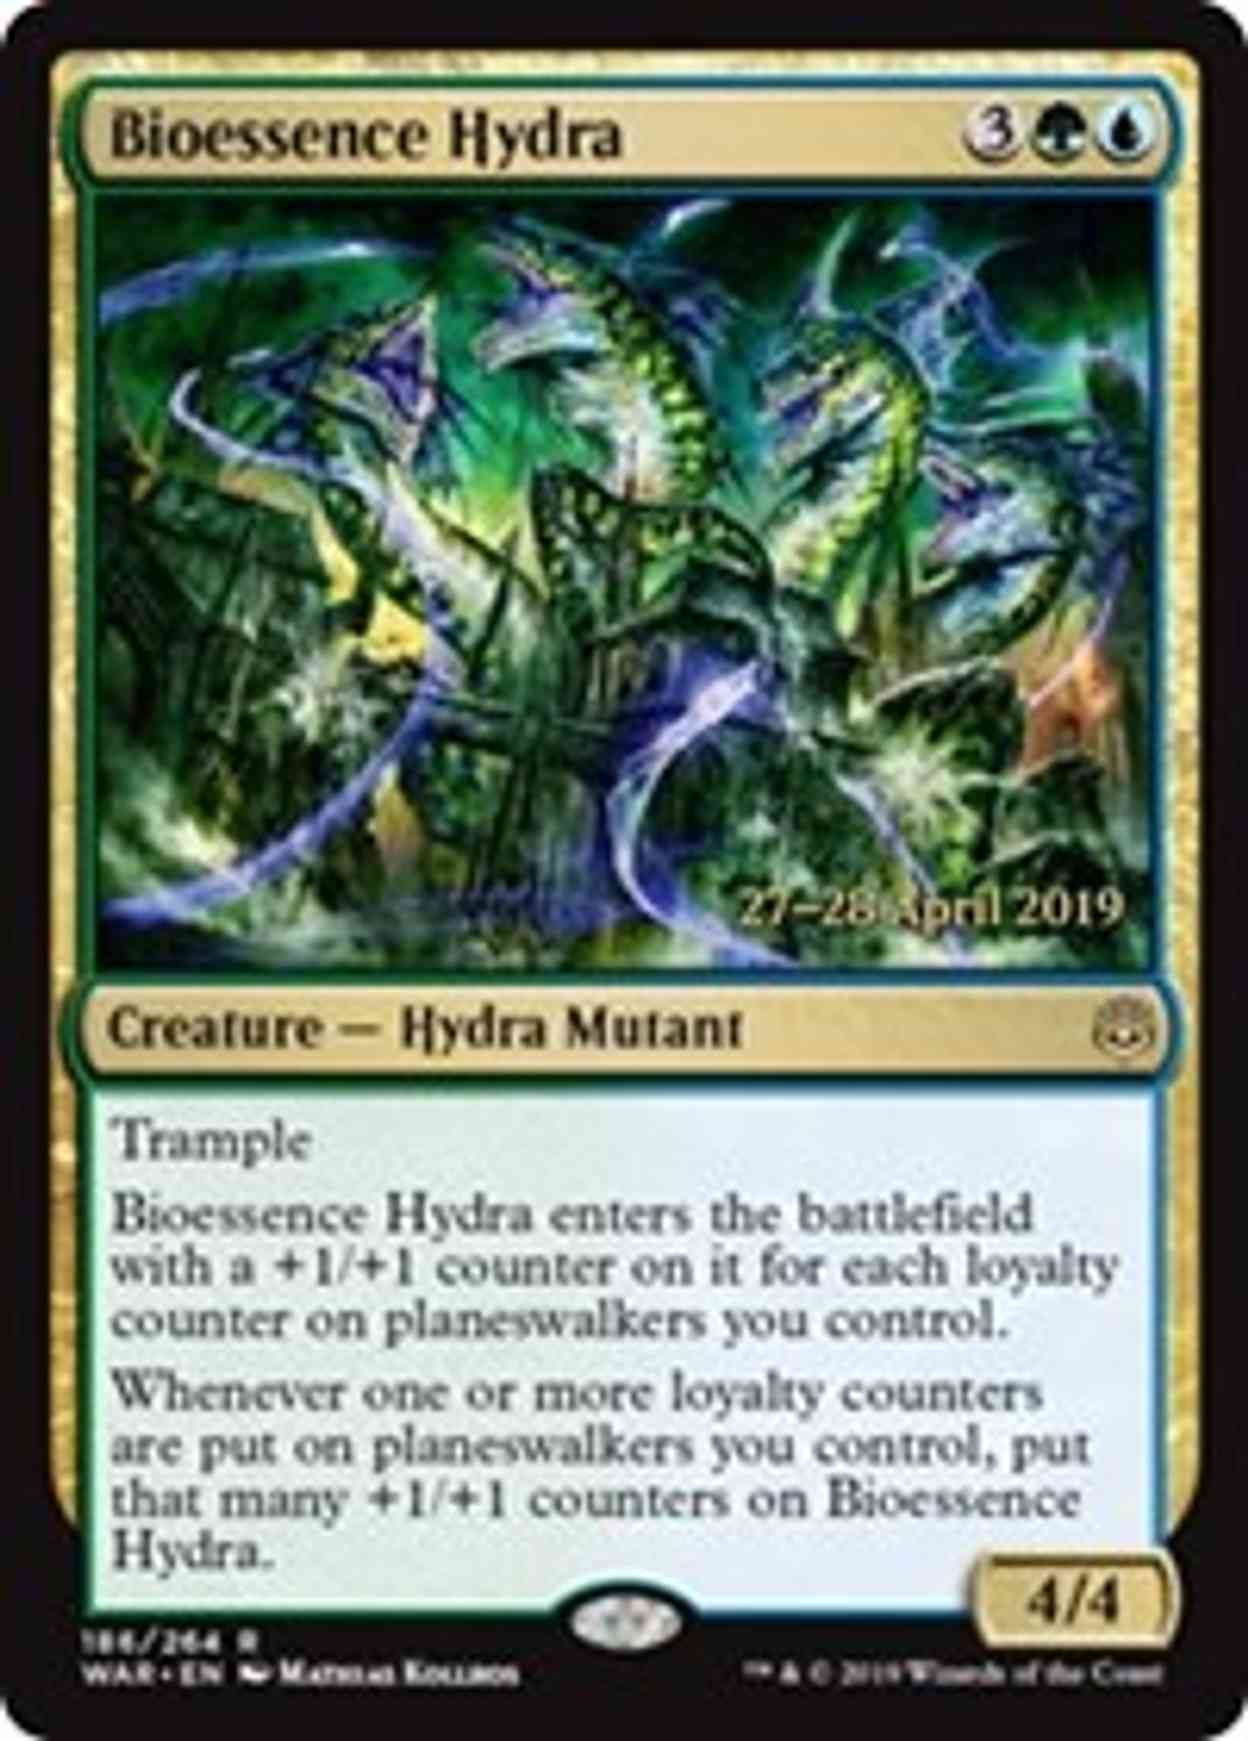 Bioessence Hydra magic card front